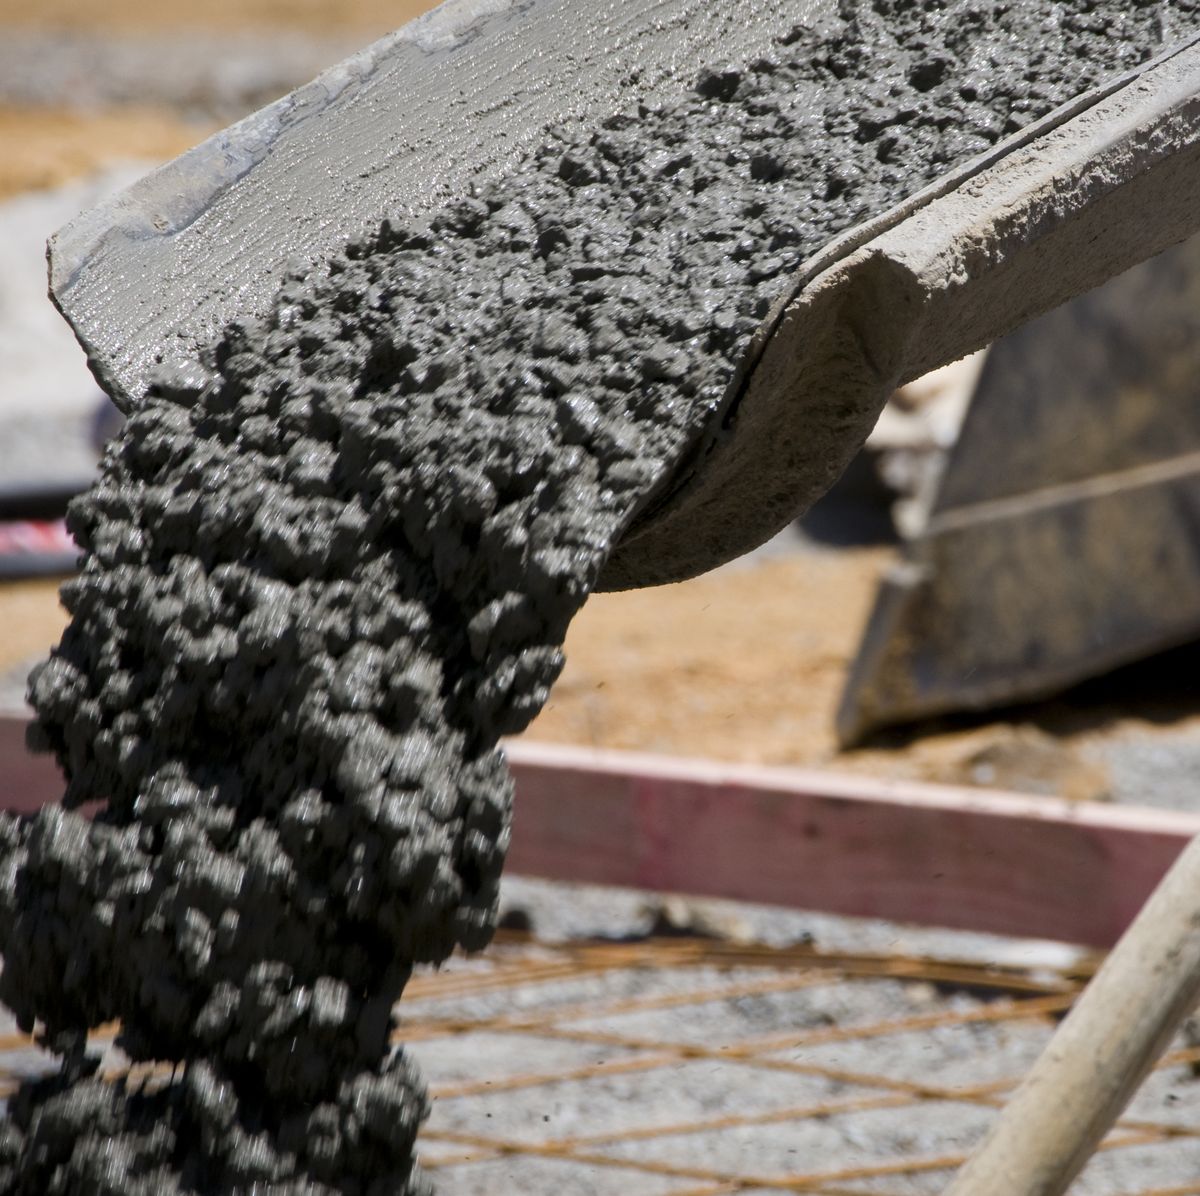 Ready Mix Concrete: The Dangers Of DIY Concrete Pouring